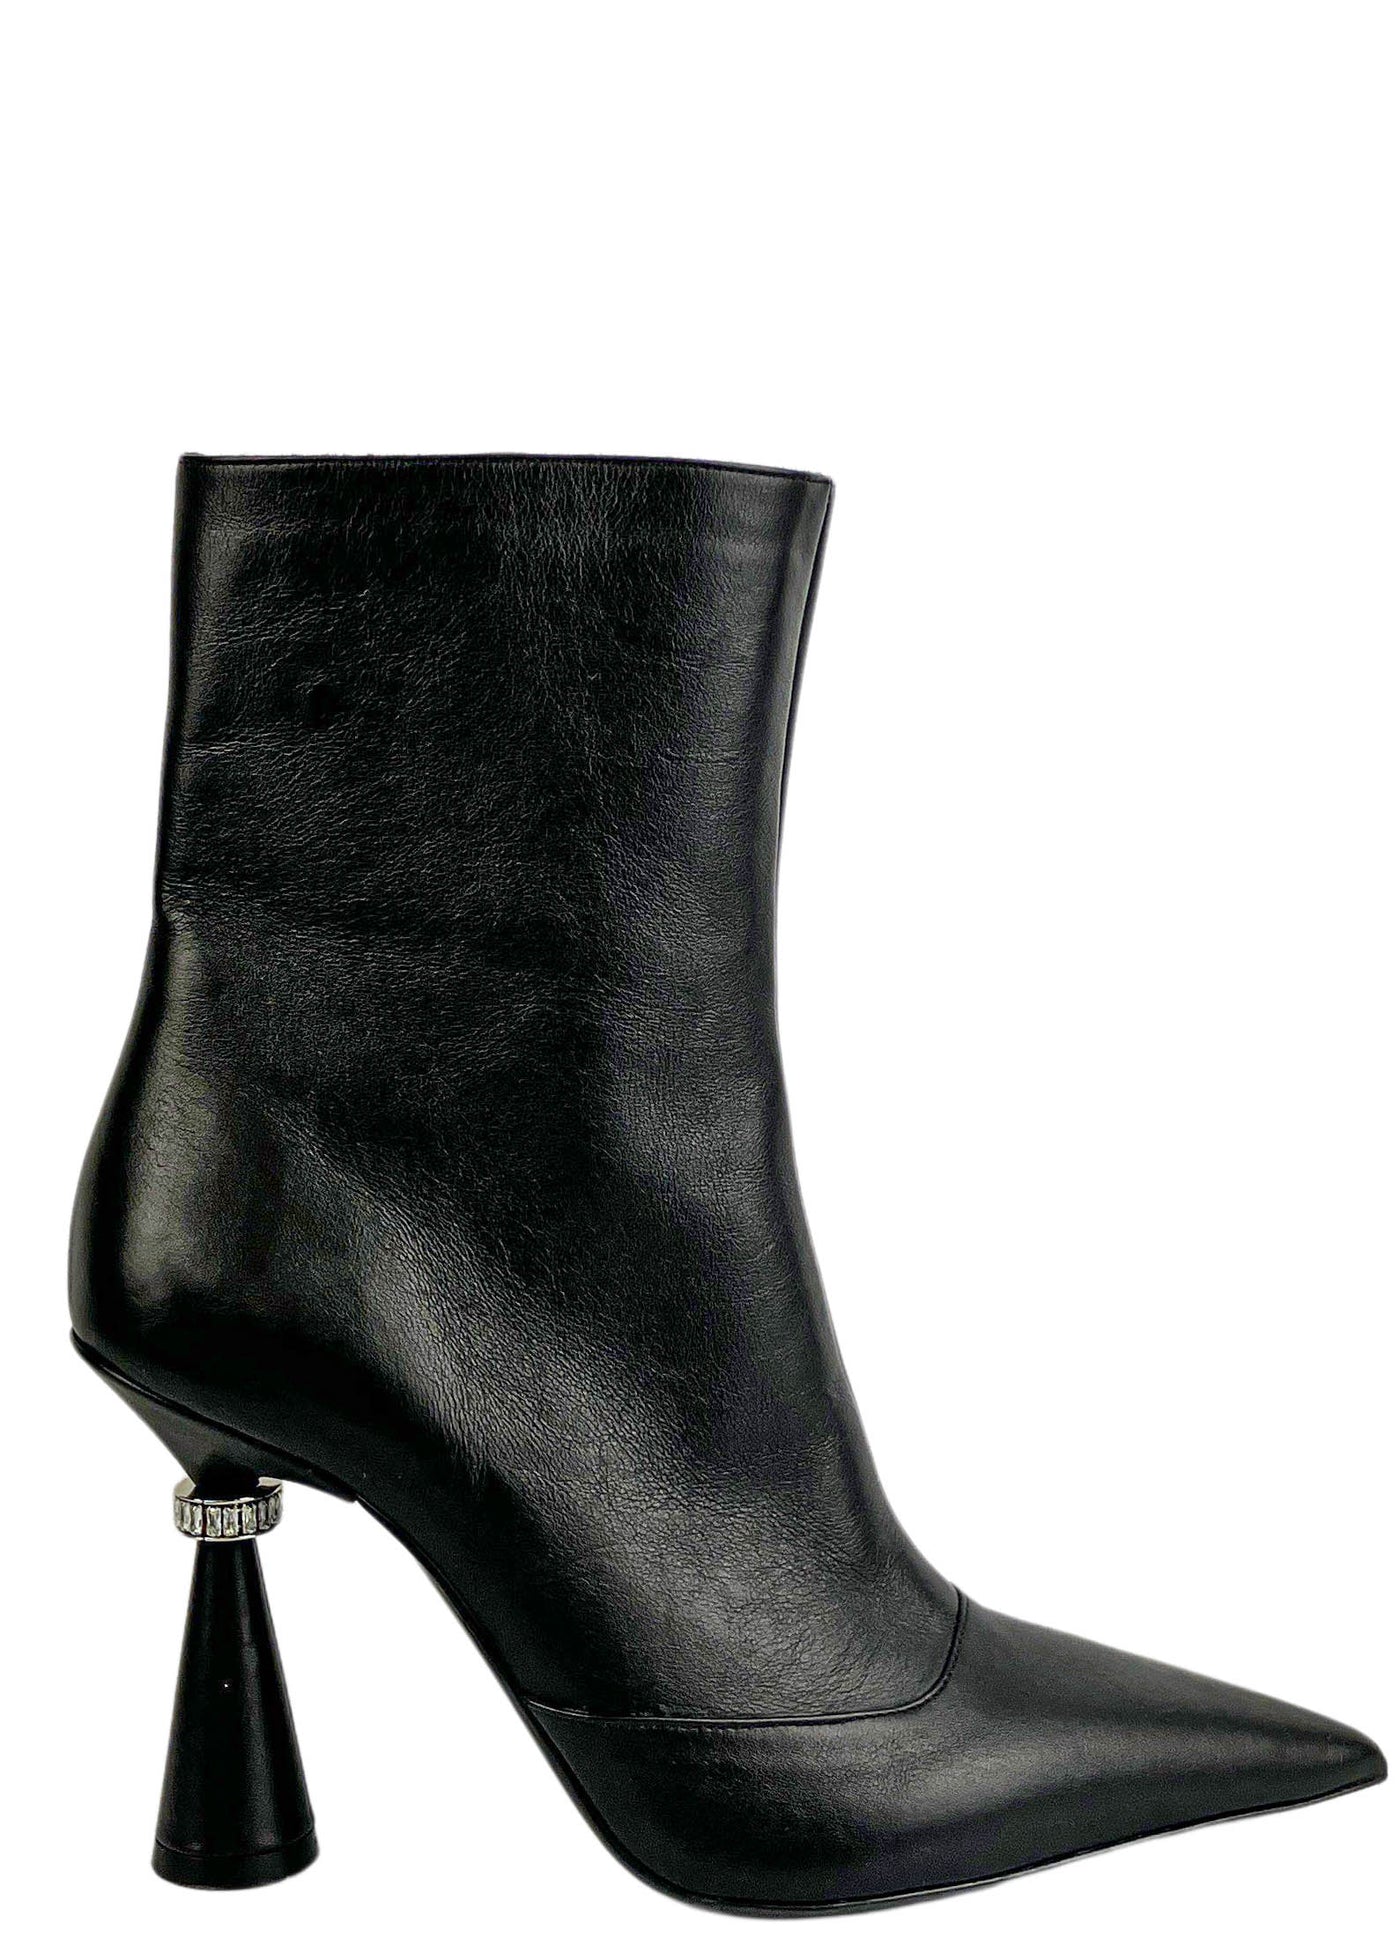 D'Accori Haze Crystal Heel  Boots in Pure Black - Discounts on D'Accori at UAL